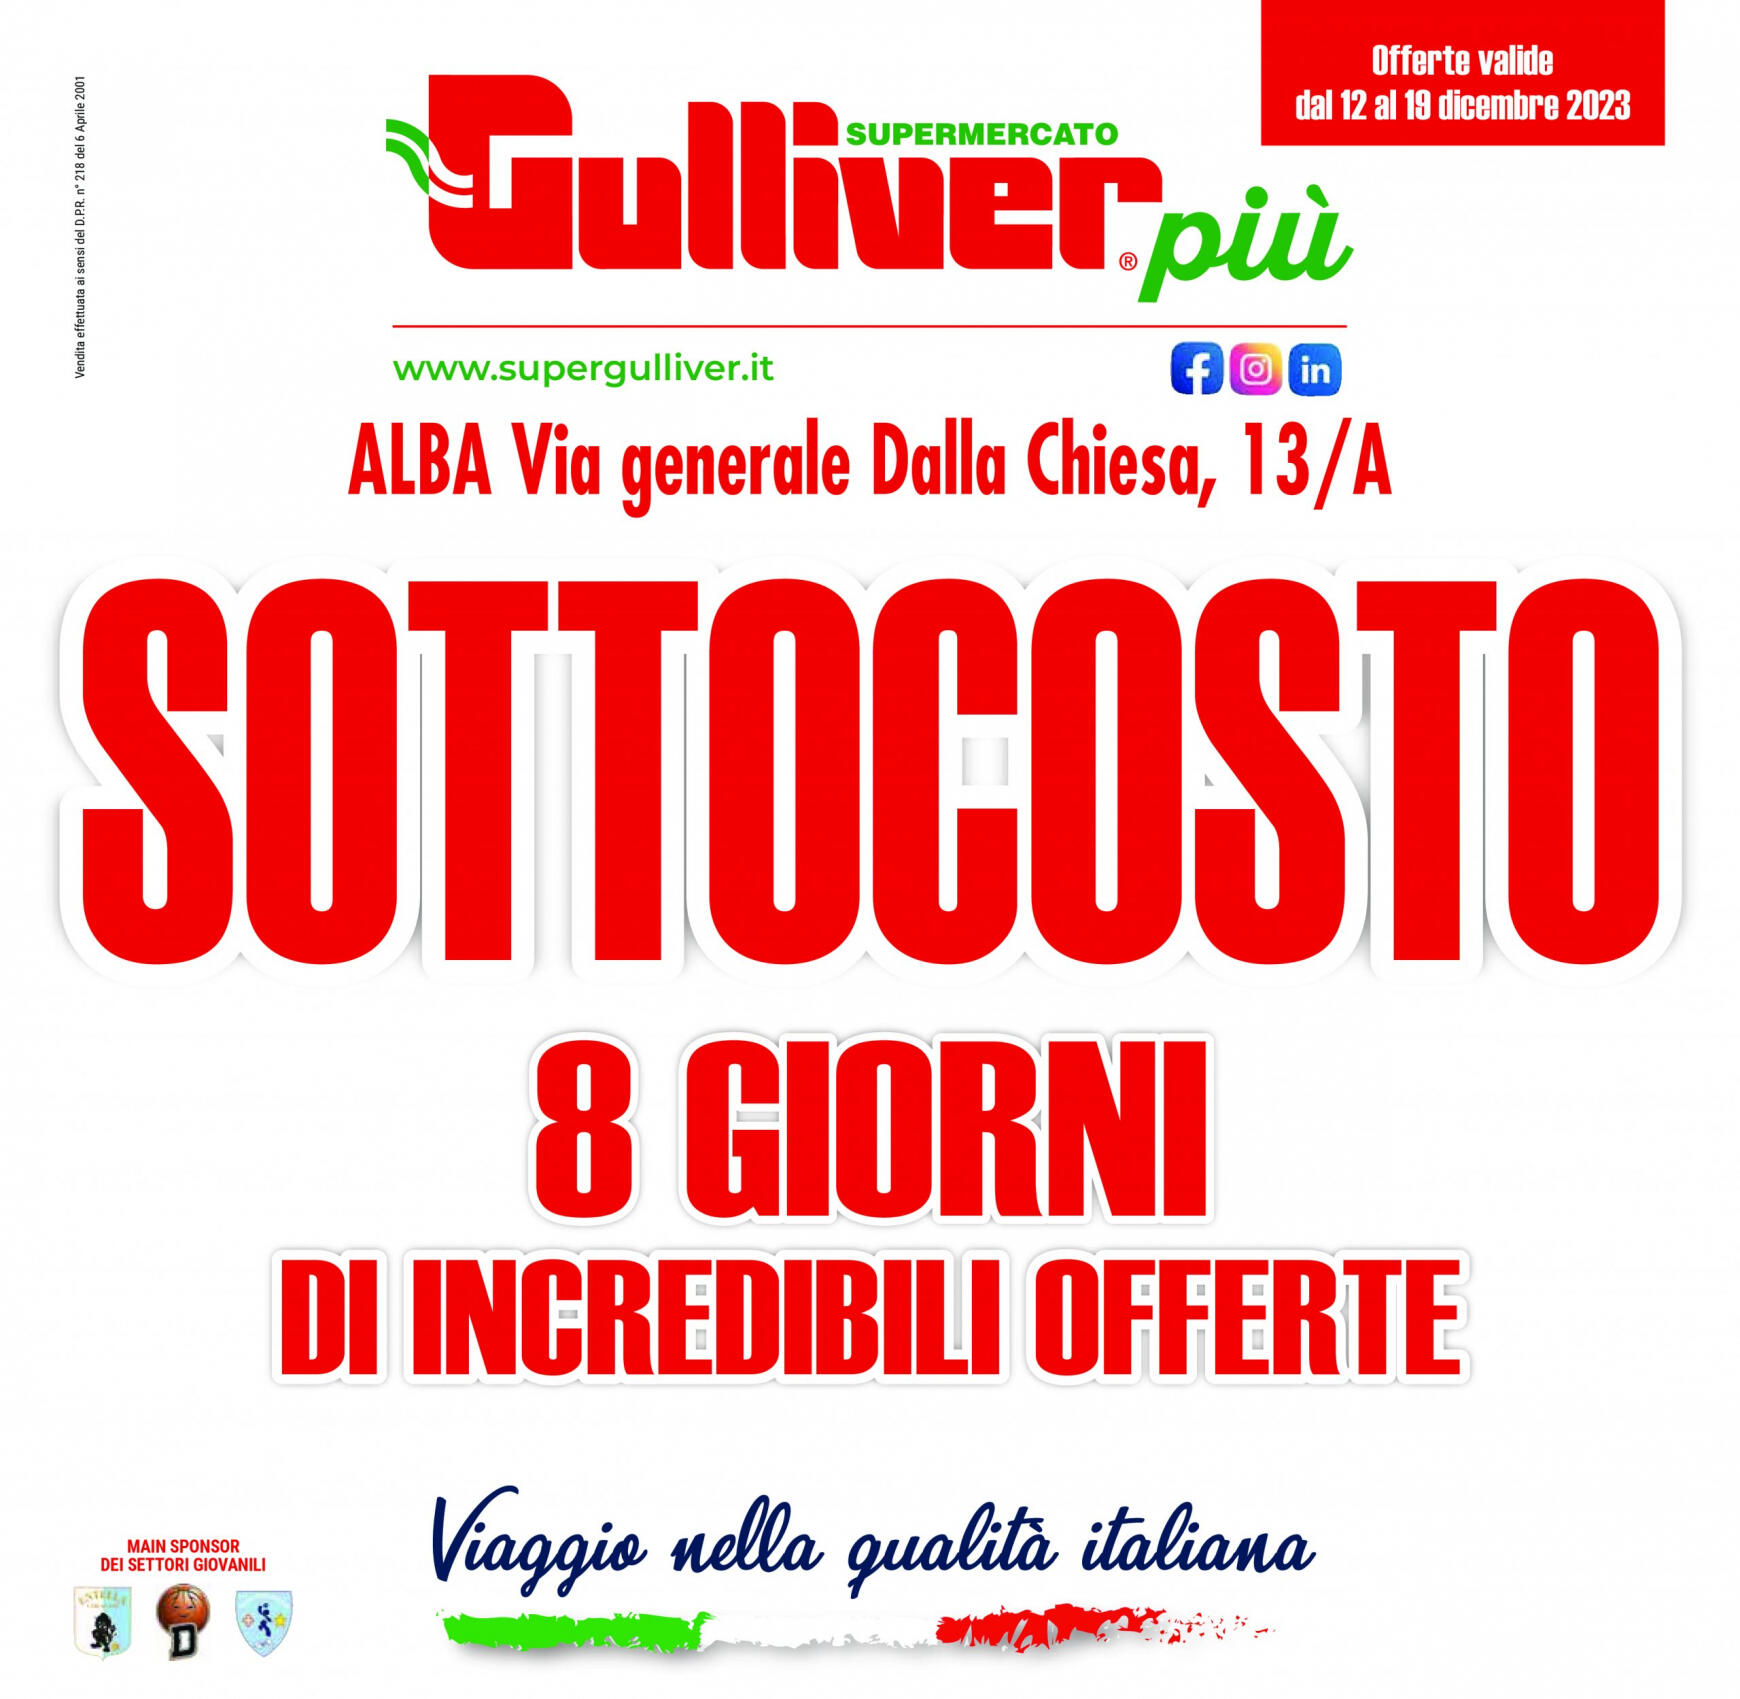 gulliver - Gulliver - Promozioni Punto Vendita Alba valido da 12.12.2023 - page: 1